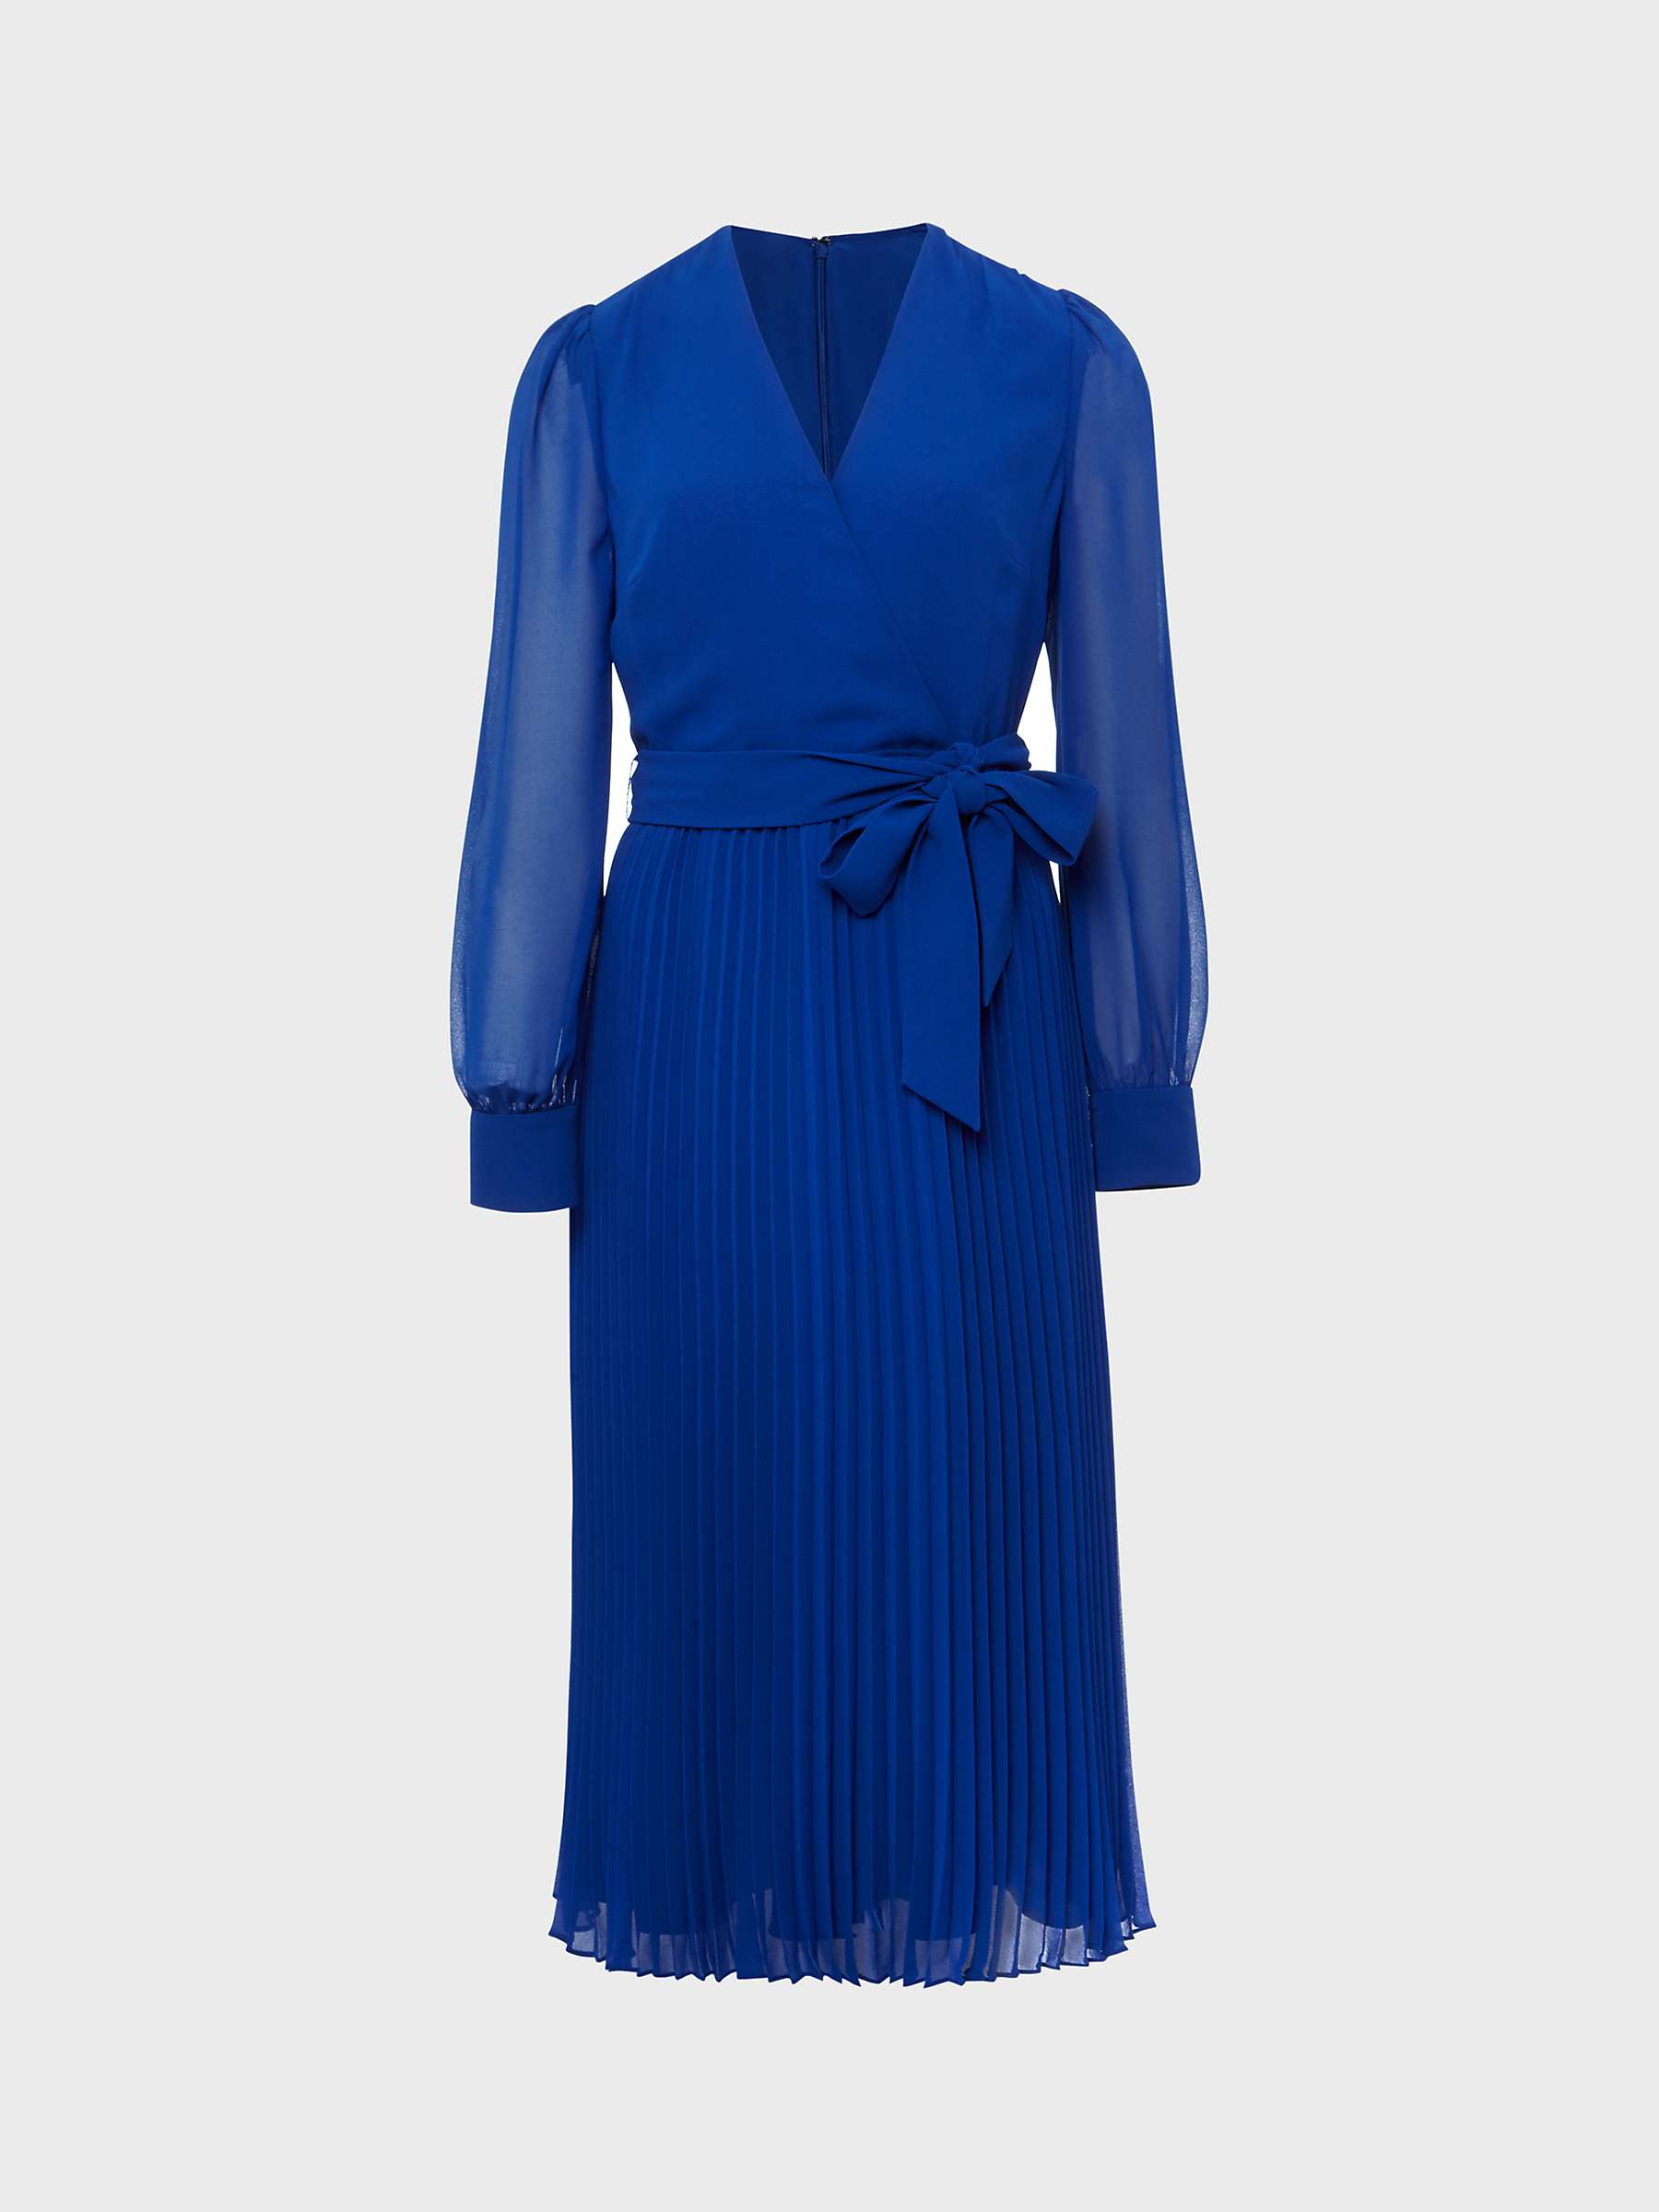 Hobbs Evelyn Pleated Dress, Cobalt Blue at John Lewis & Partners